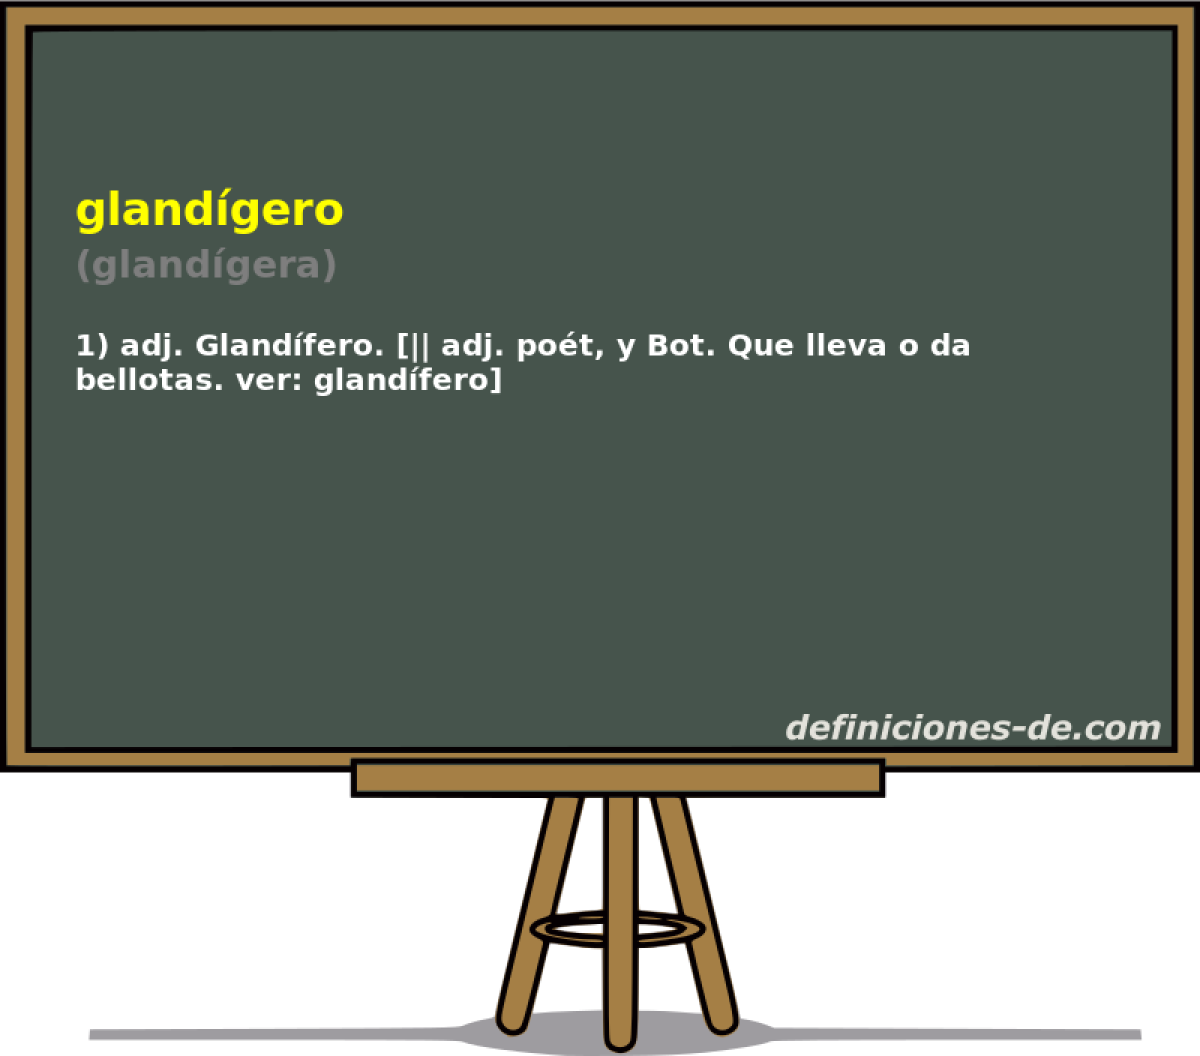 glandgero (glandgera)